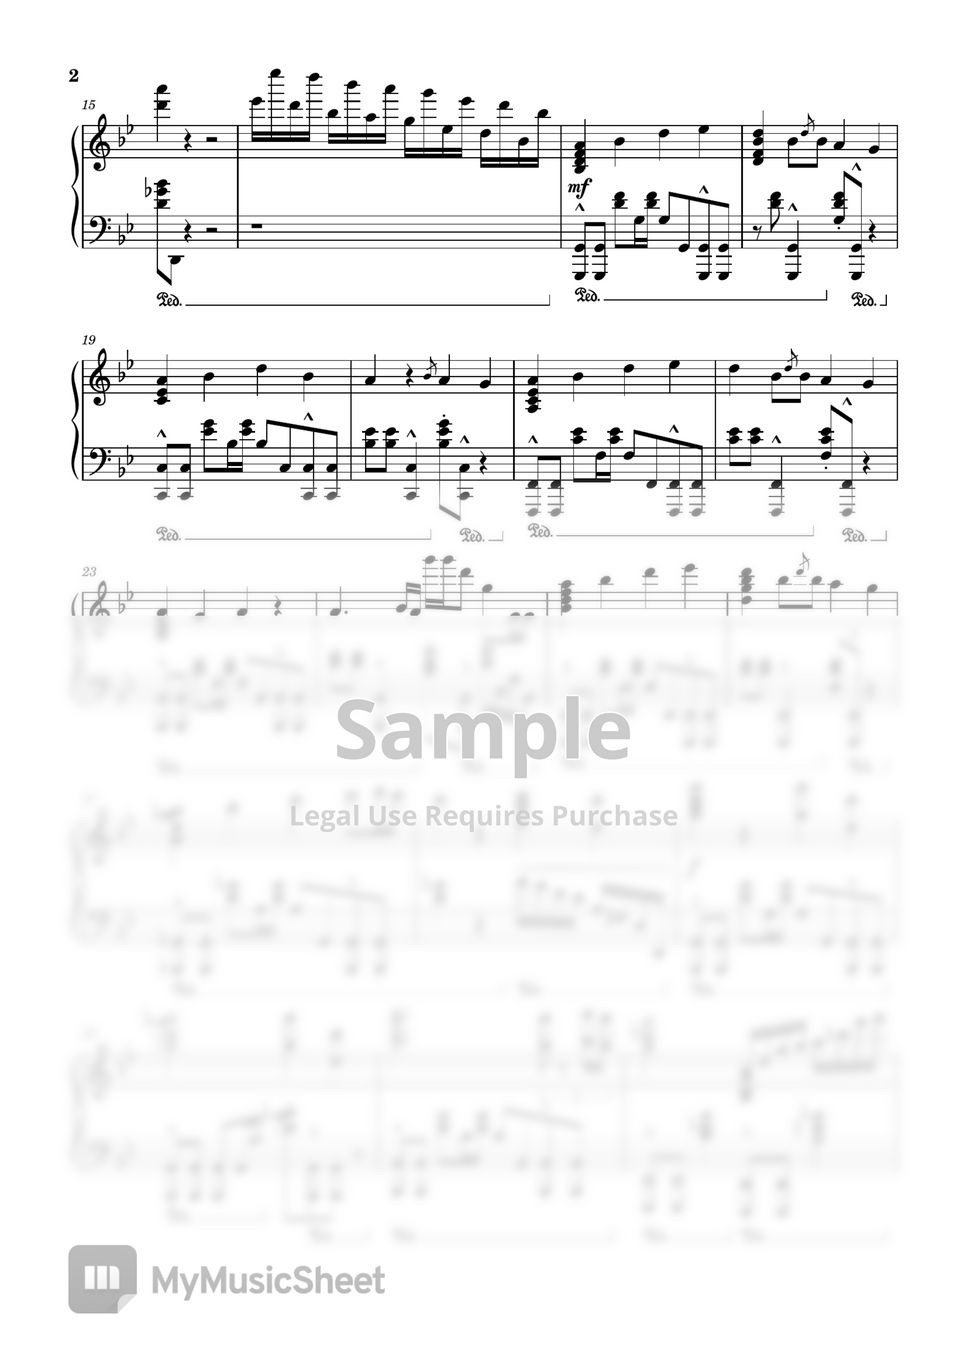 Alphonso's 'Tattered Paper' Sheet Music 🎼 : r/Genshin_Lore